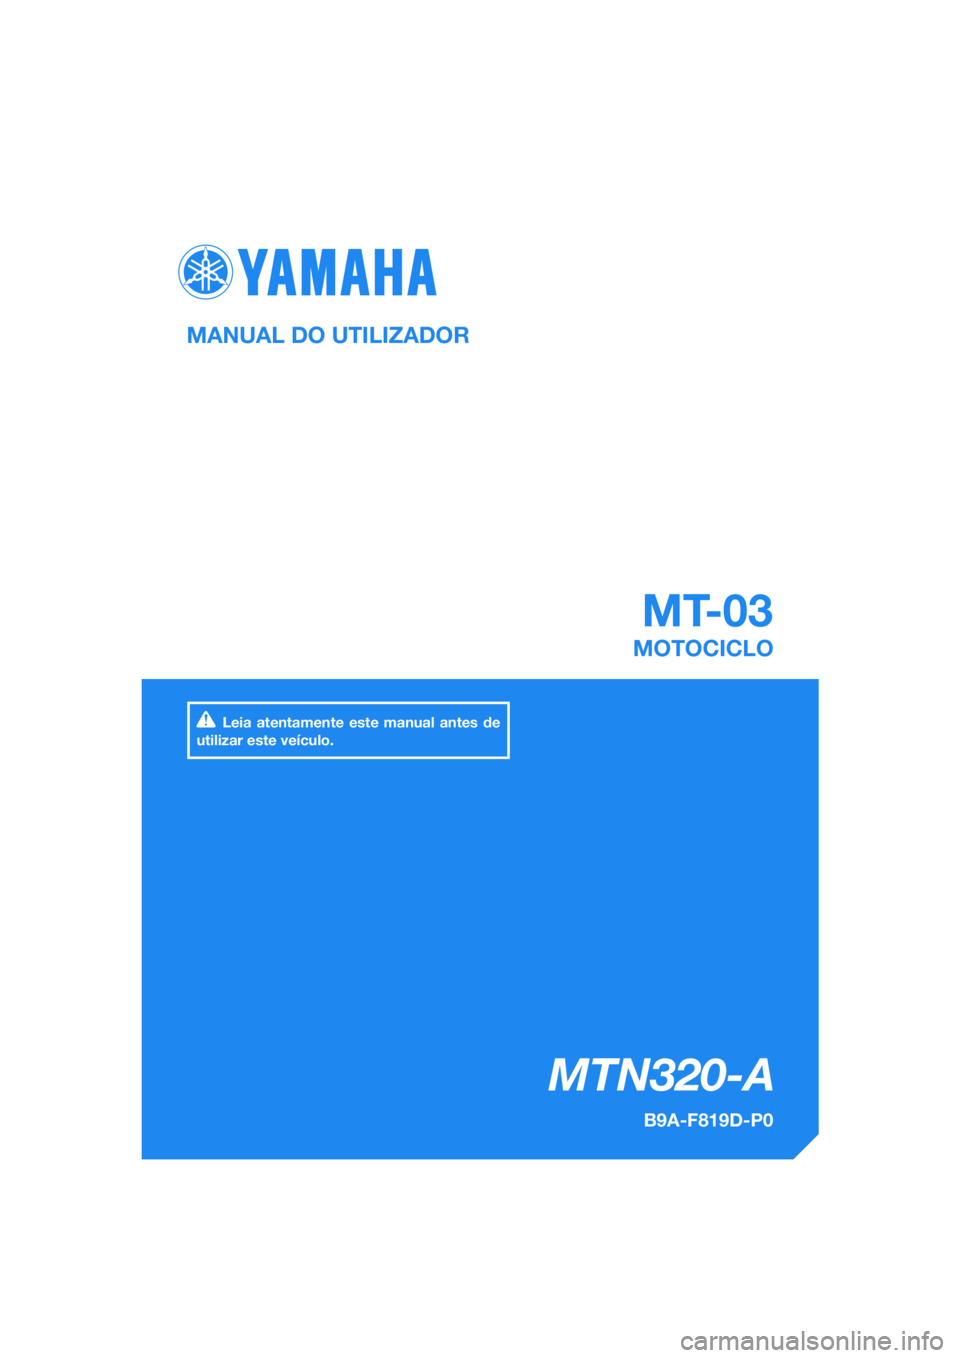 YAMAHA MT-03 2018  Manual de utilização (in Portuguese) DIC183
MT-03
MTN320-A
MANUAL DO UTILIZADOR
B9A-F819D-P0
MOTOCICLO
Leia atentamente este manual antes de 
utilizar este veículo.
[Portuguese  (P)] 